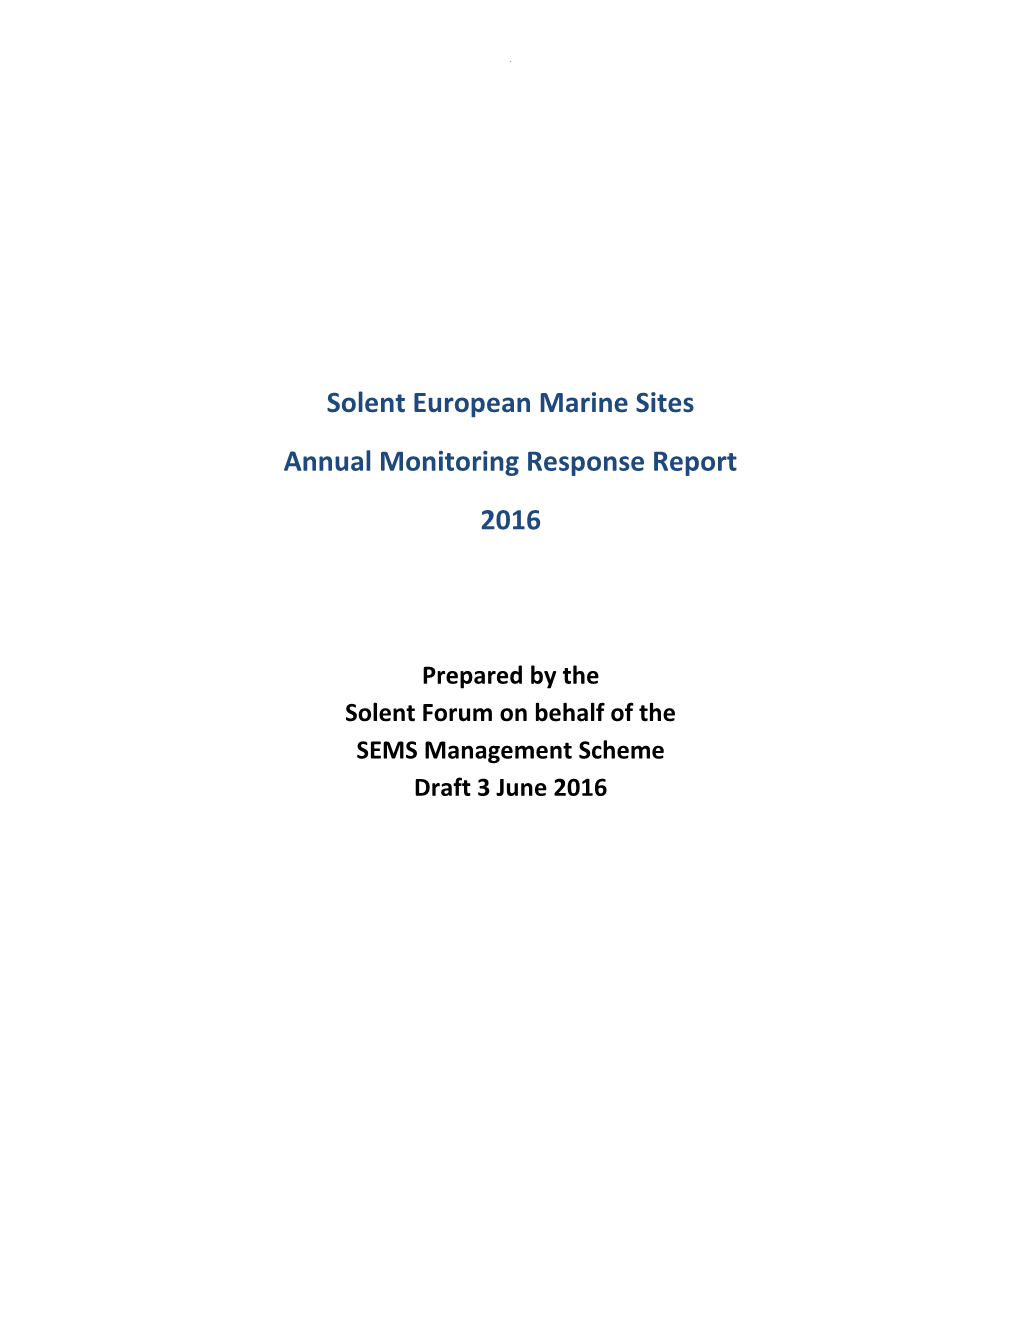 SEMS Response Report 2016SEMS Management Scheme 2016